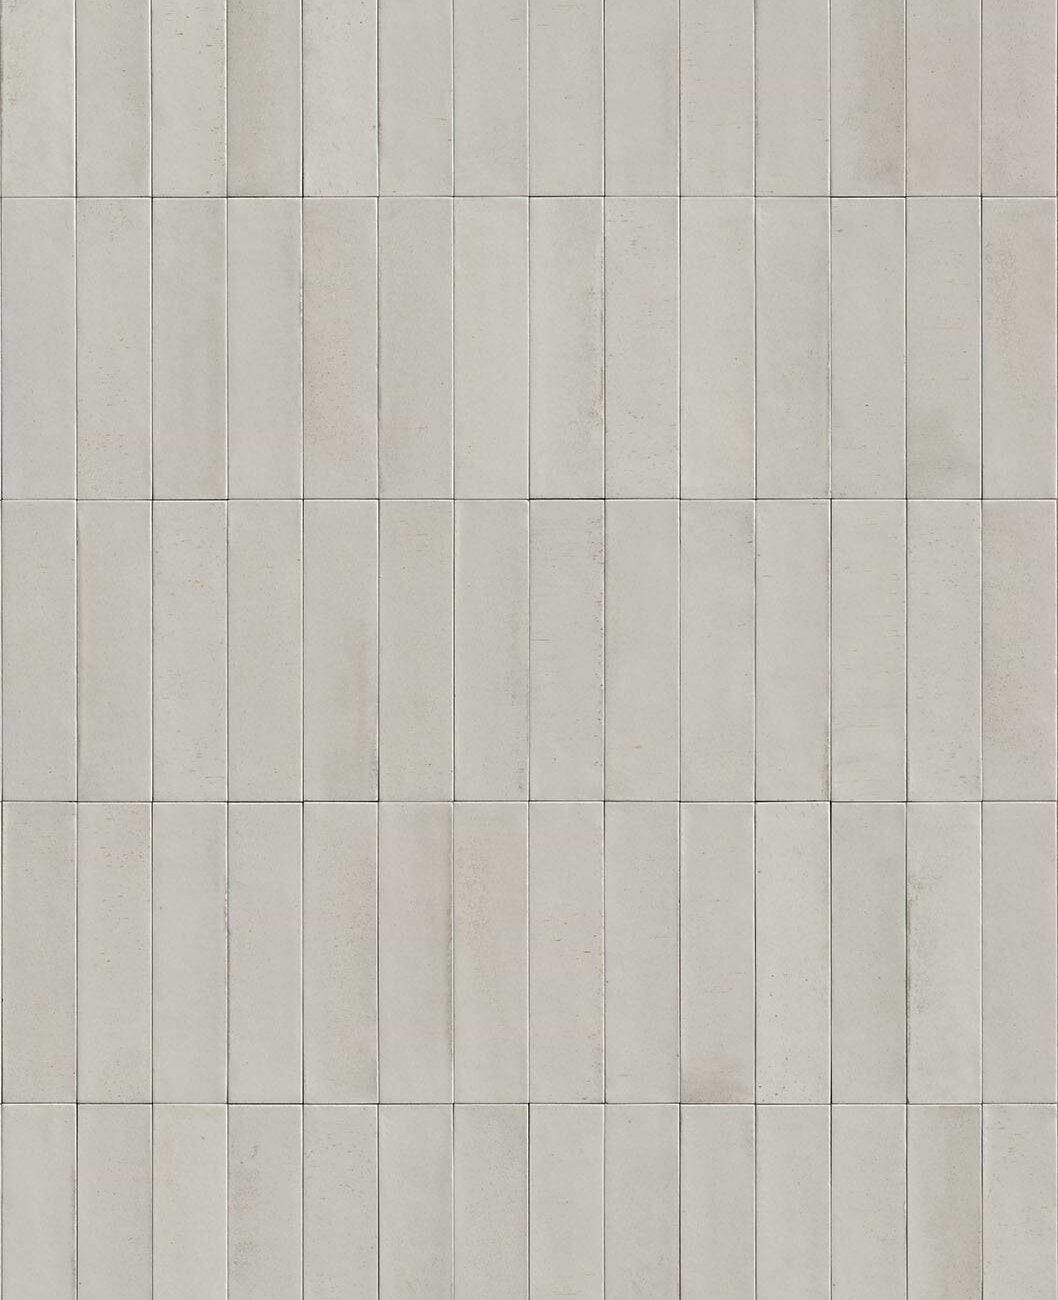 Minoli Wall &amp; Floor Tiles 6 x 24 x 1cm Luminous Lume Classic White